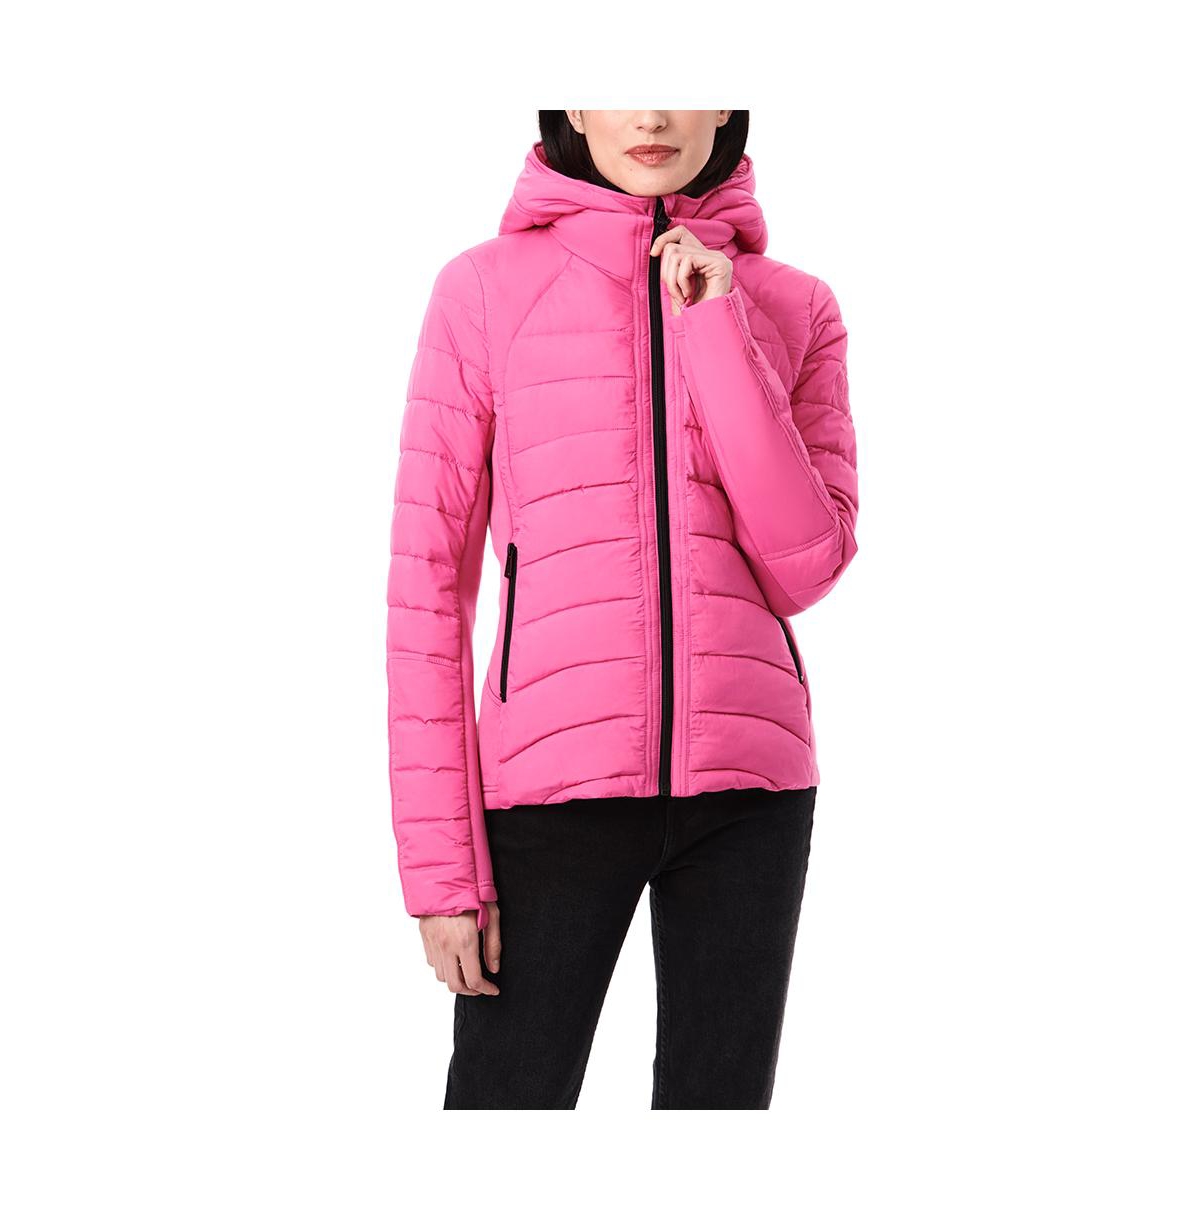 Women's Active Jacket with Neoprene - Vibrant pink